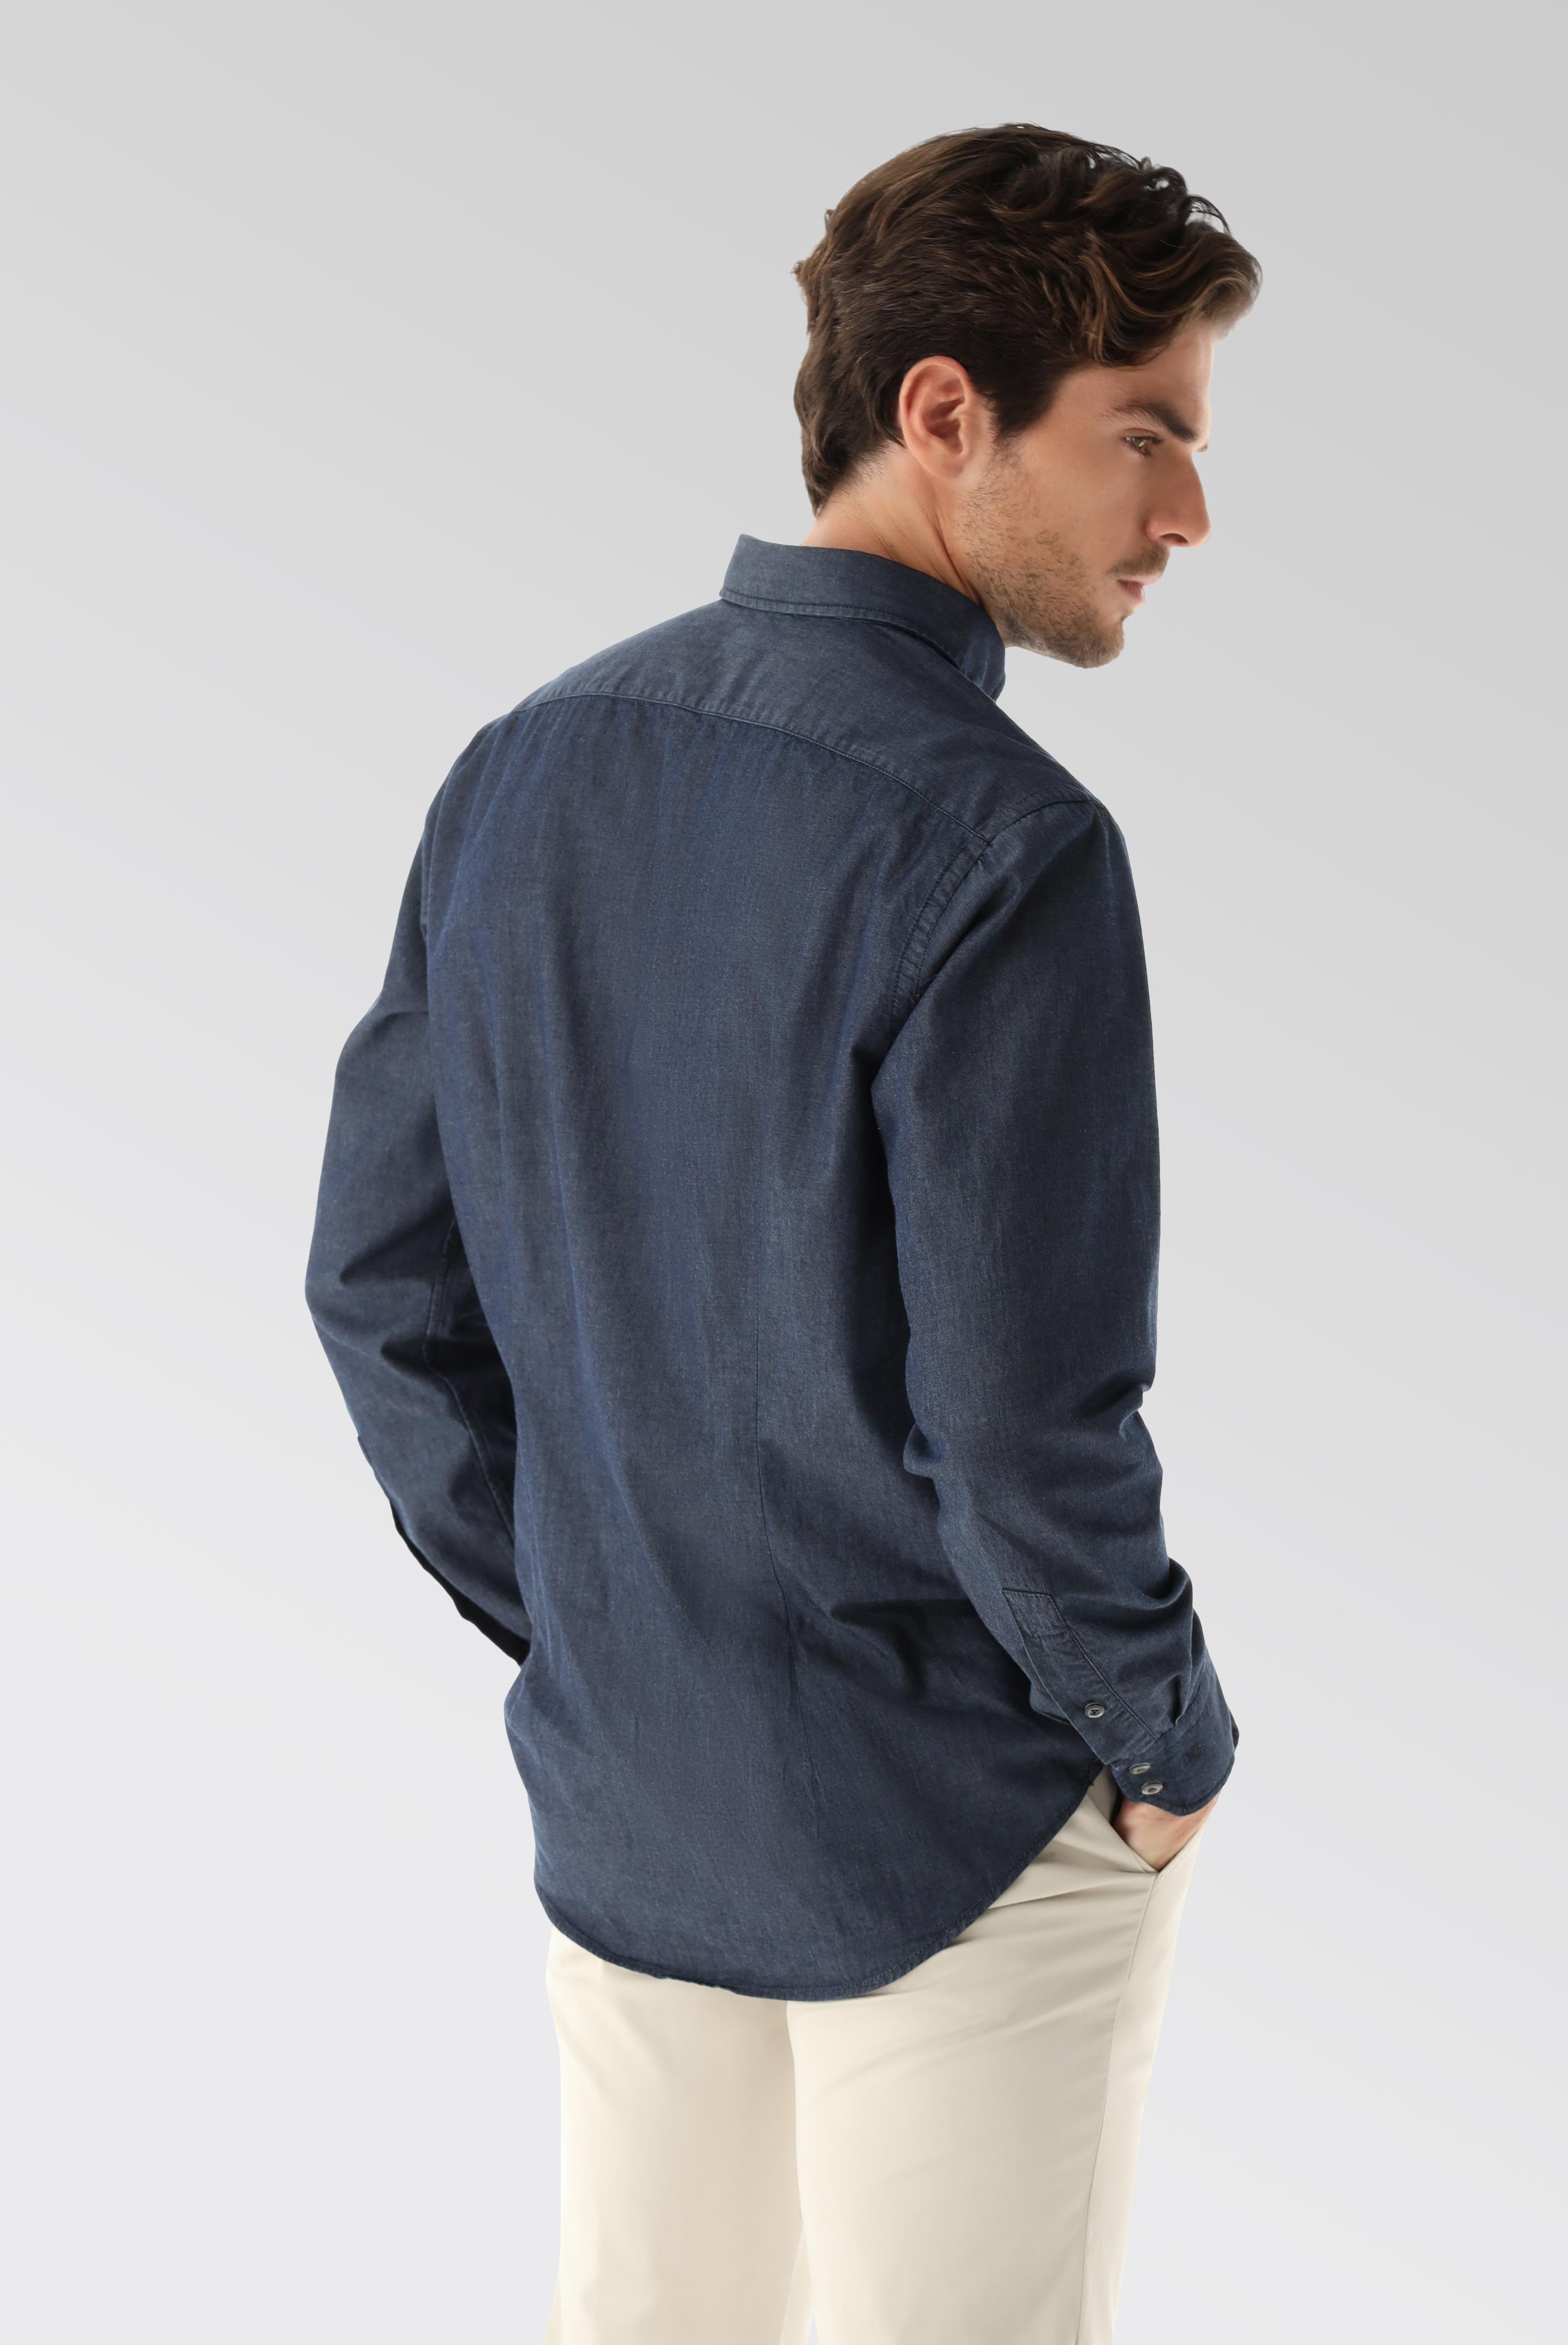 Casual Hemden+Jeans Hemd Tailor Fit+20.2013.EP.155330.780.39